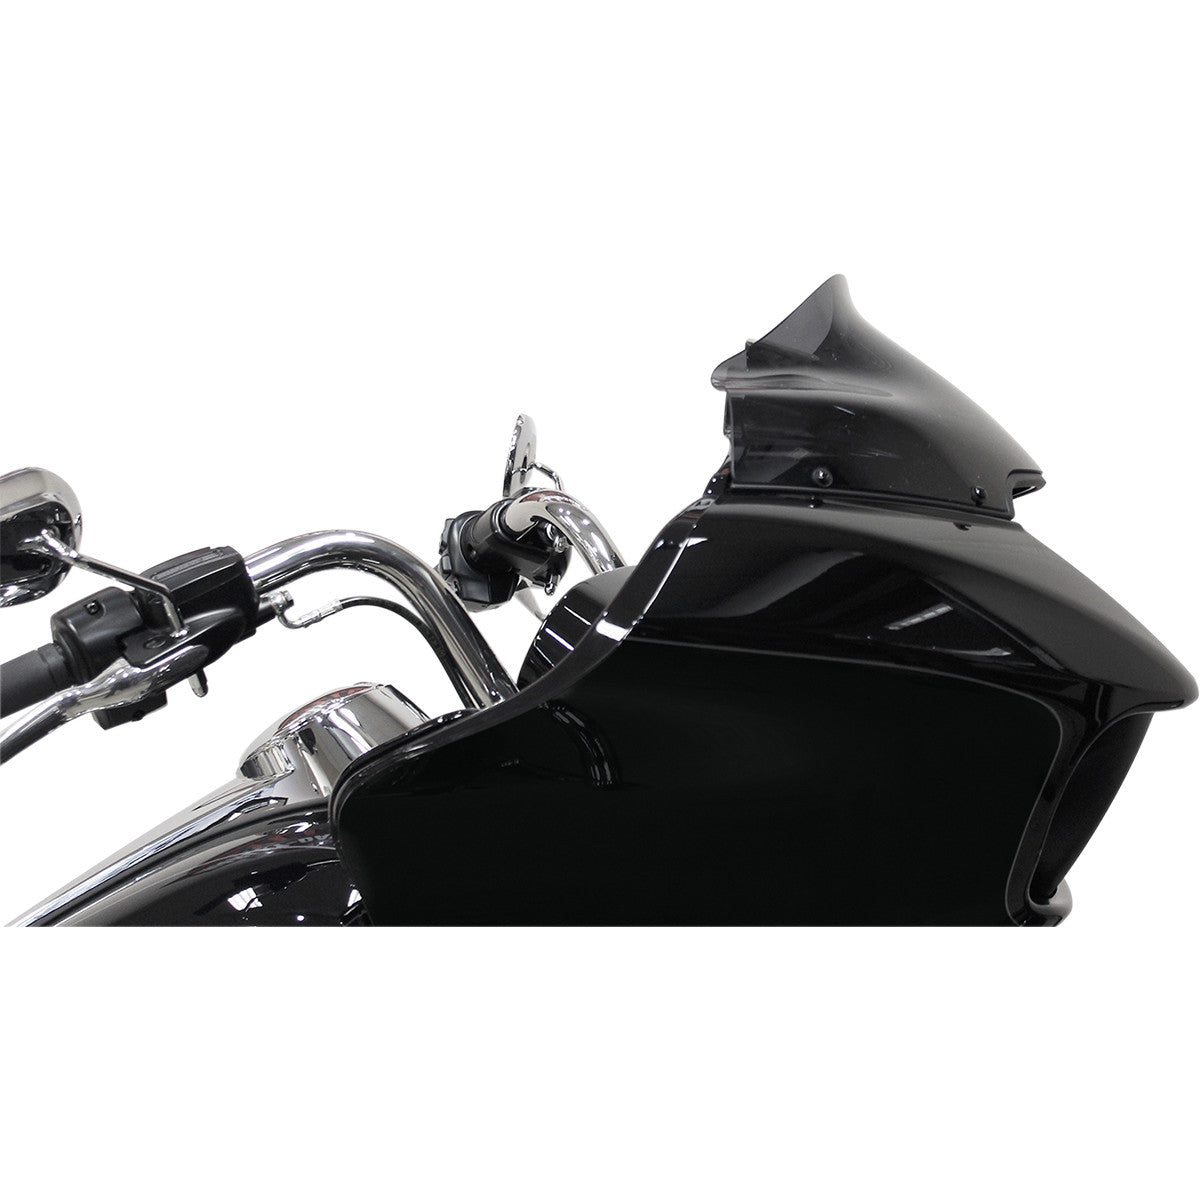 Lapcharisas 9 "Klock Werks Sport Flare Harley-Davidson Road Glide